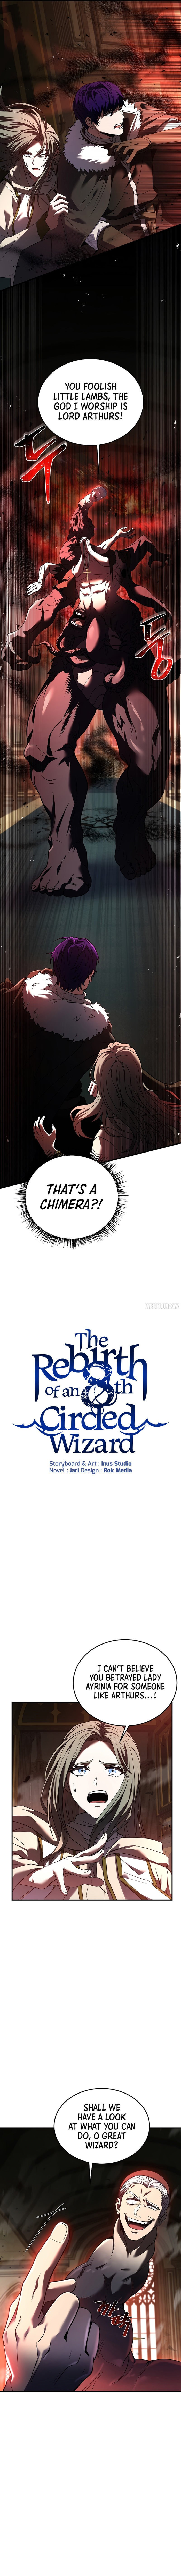 rebirth-of-the-8-circled-mage-chap-143-3